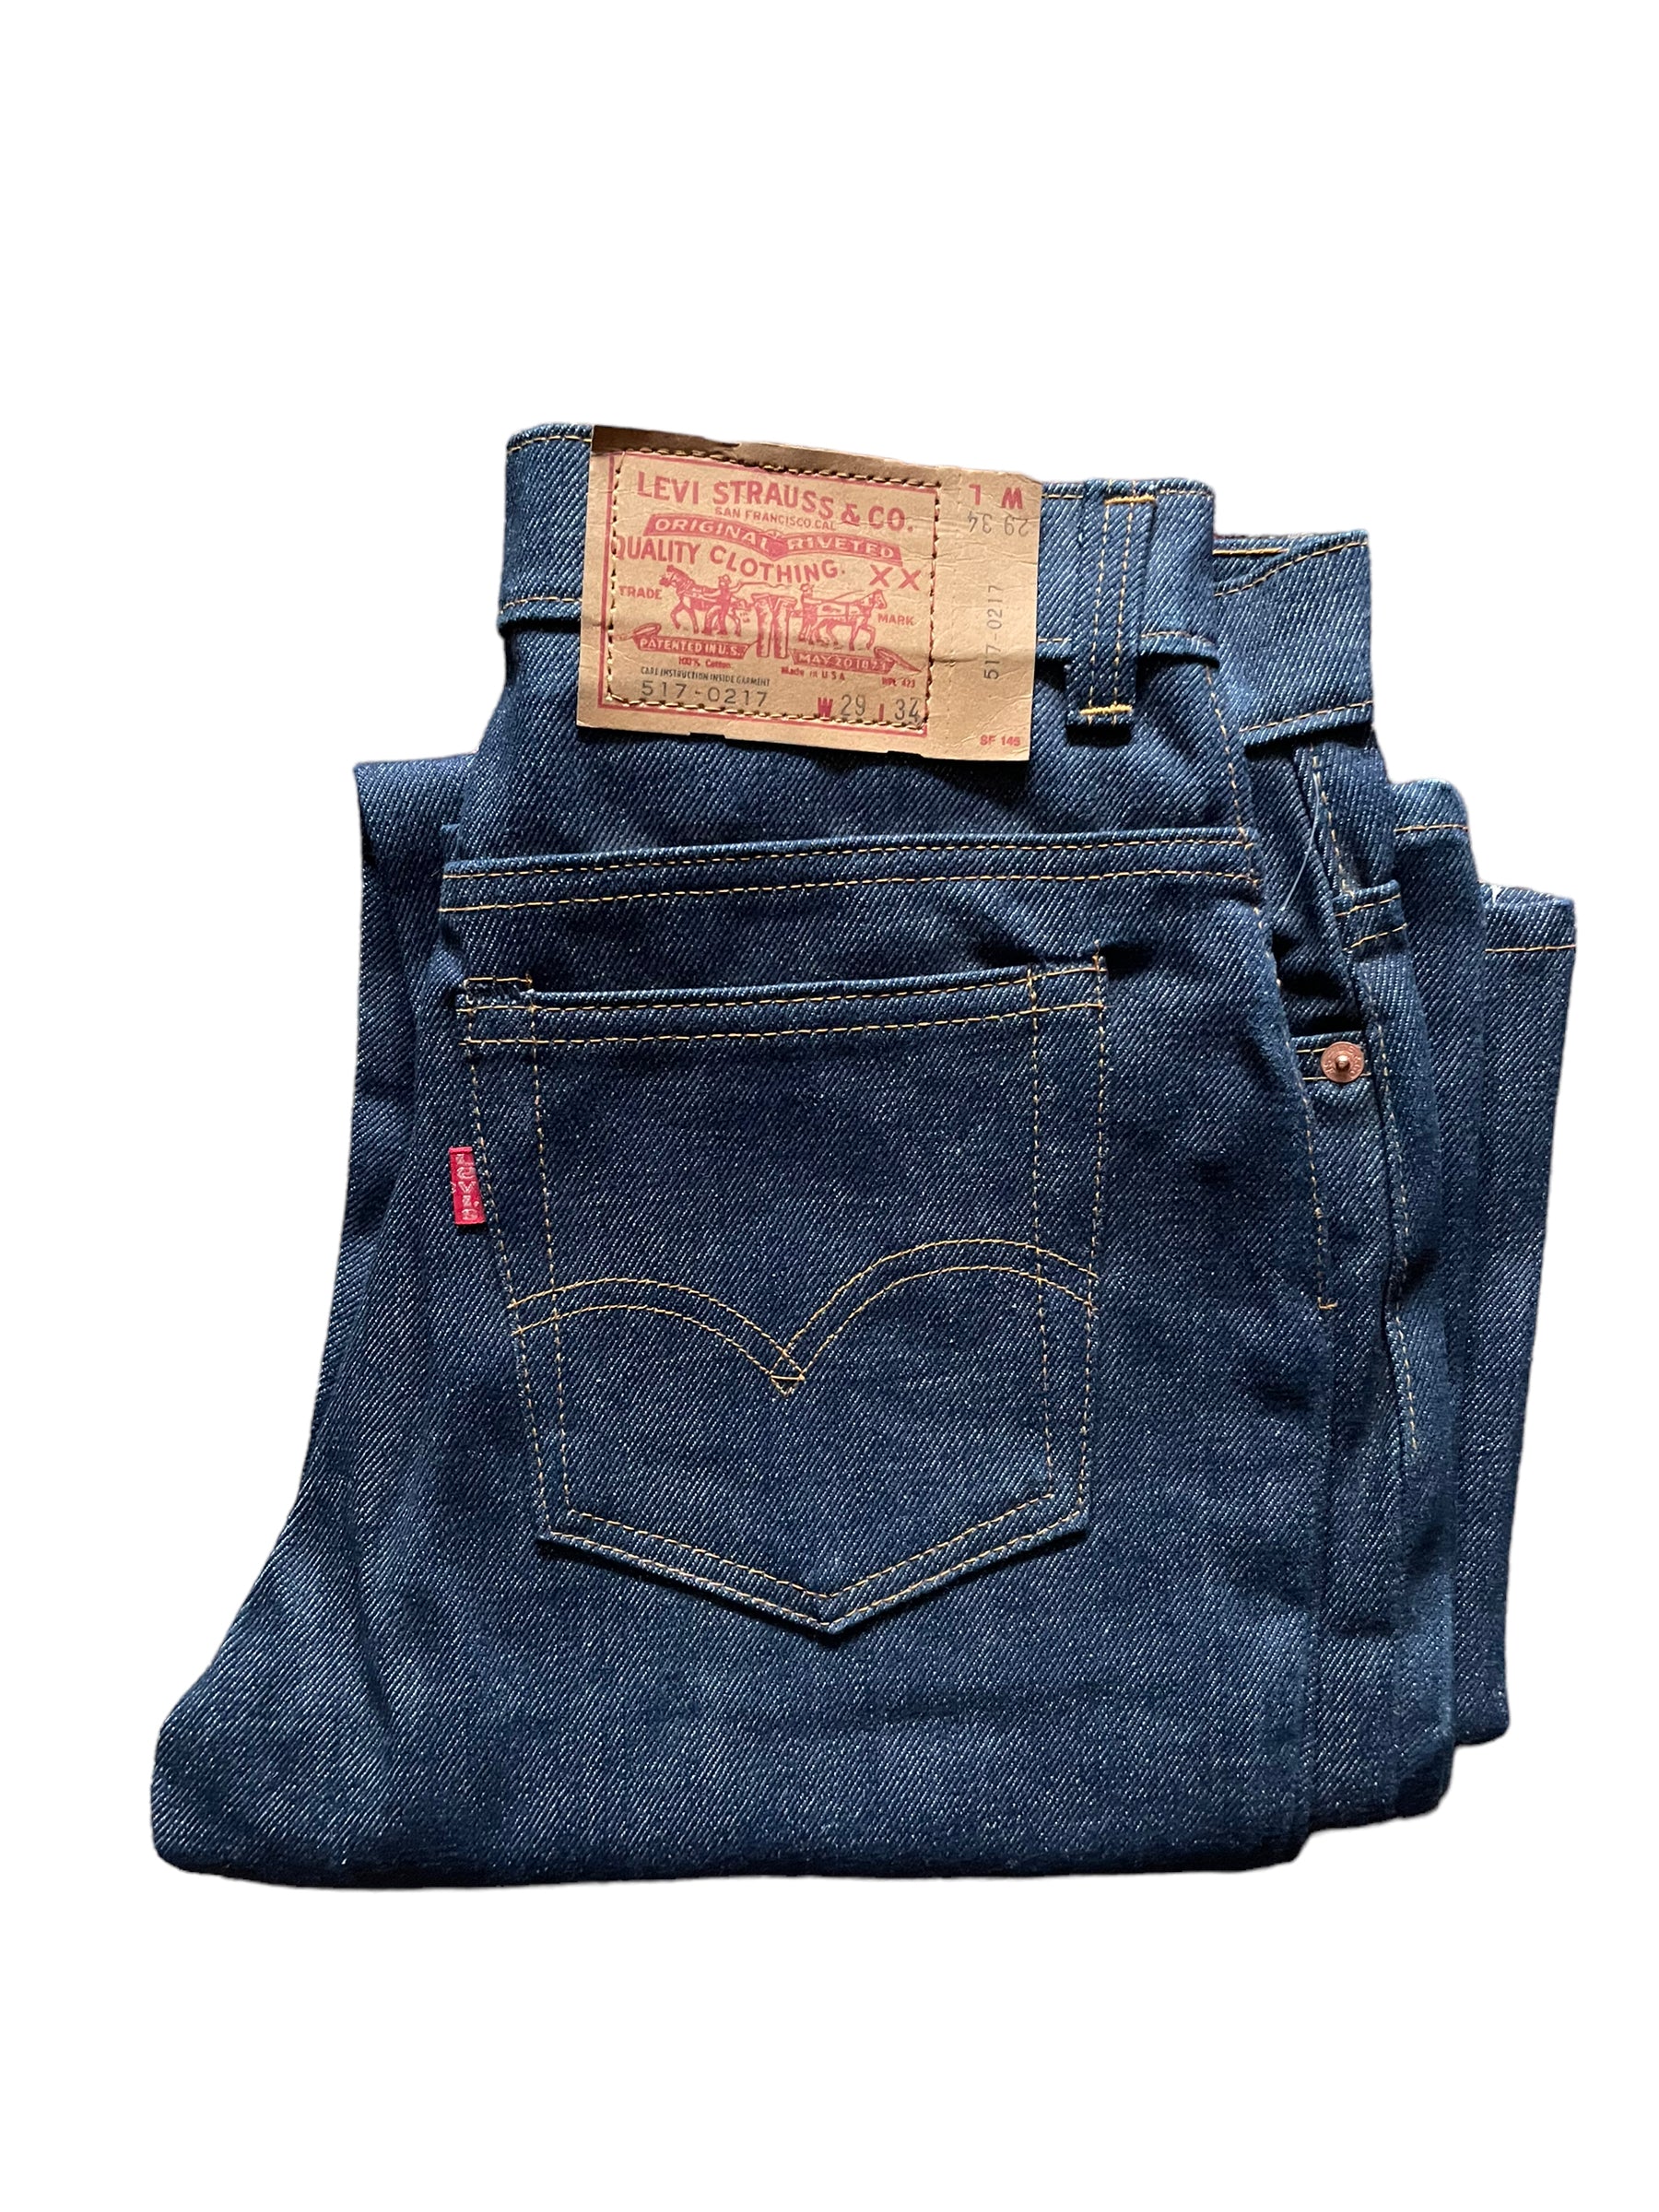 Vintage NOS Levis Boot Cut 517 Jeans W29 | Barn Owl Vintage Seattle ...